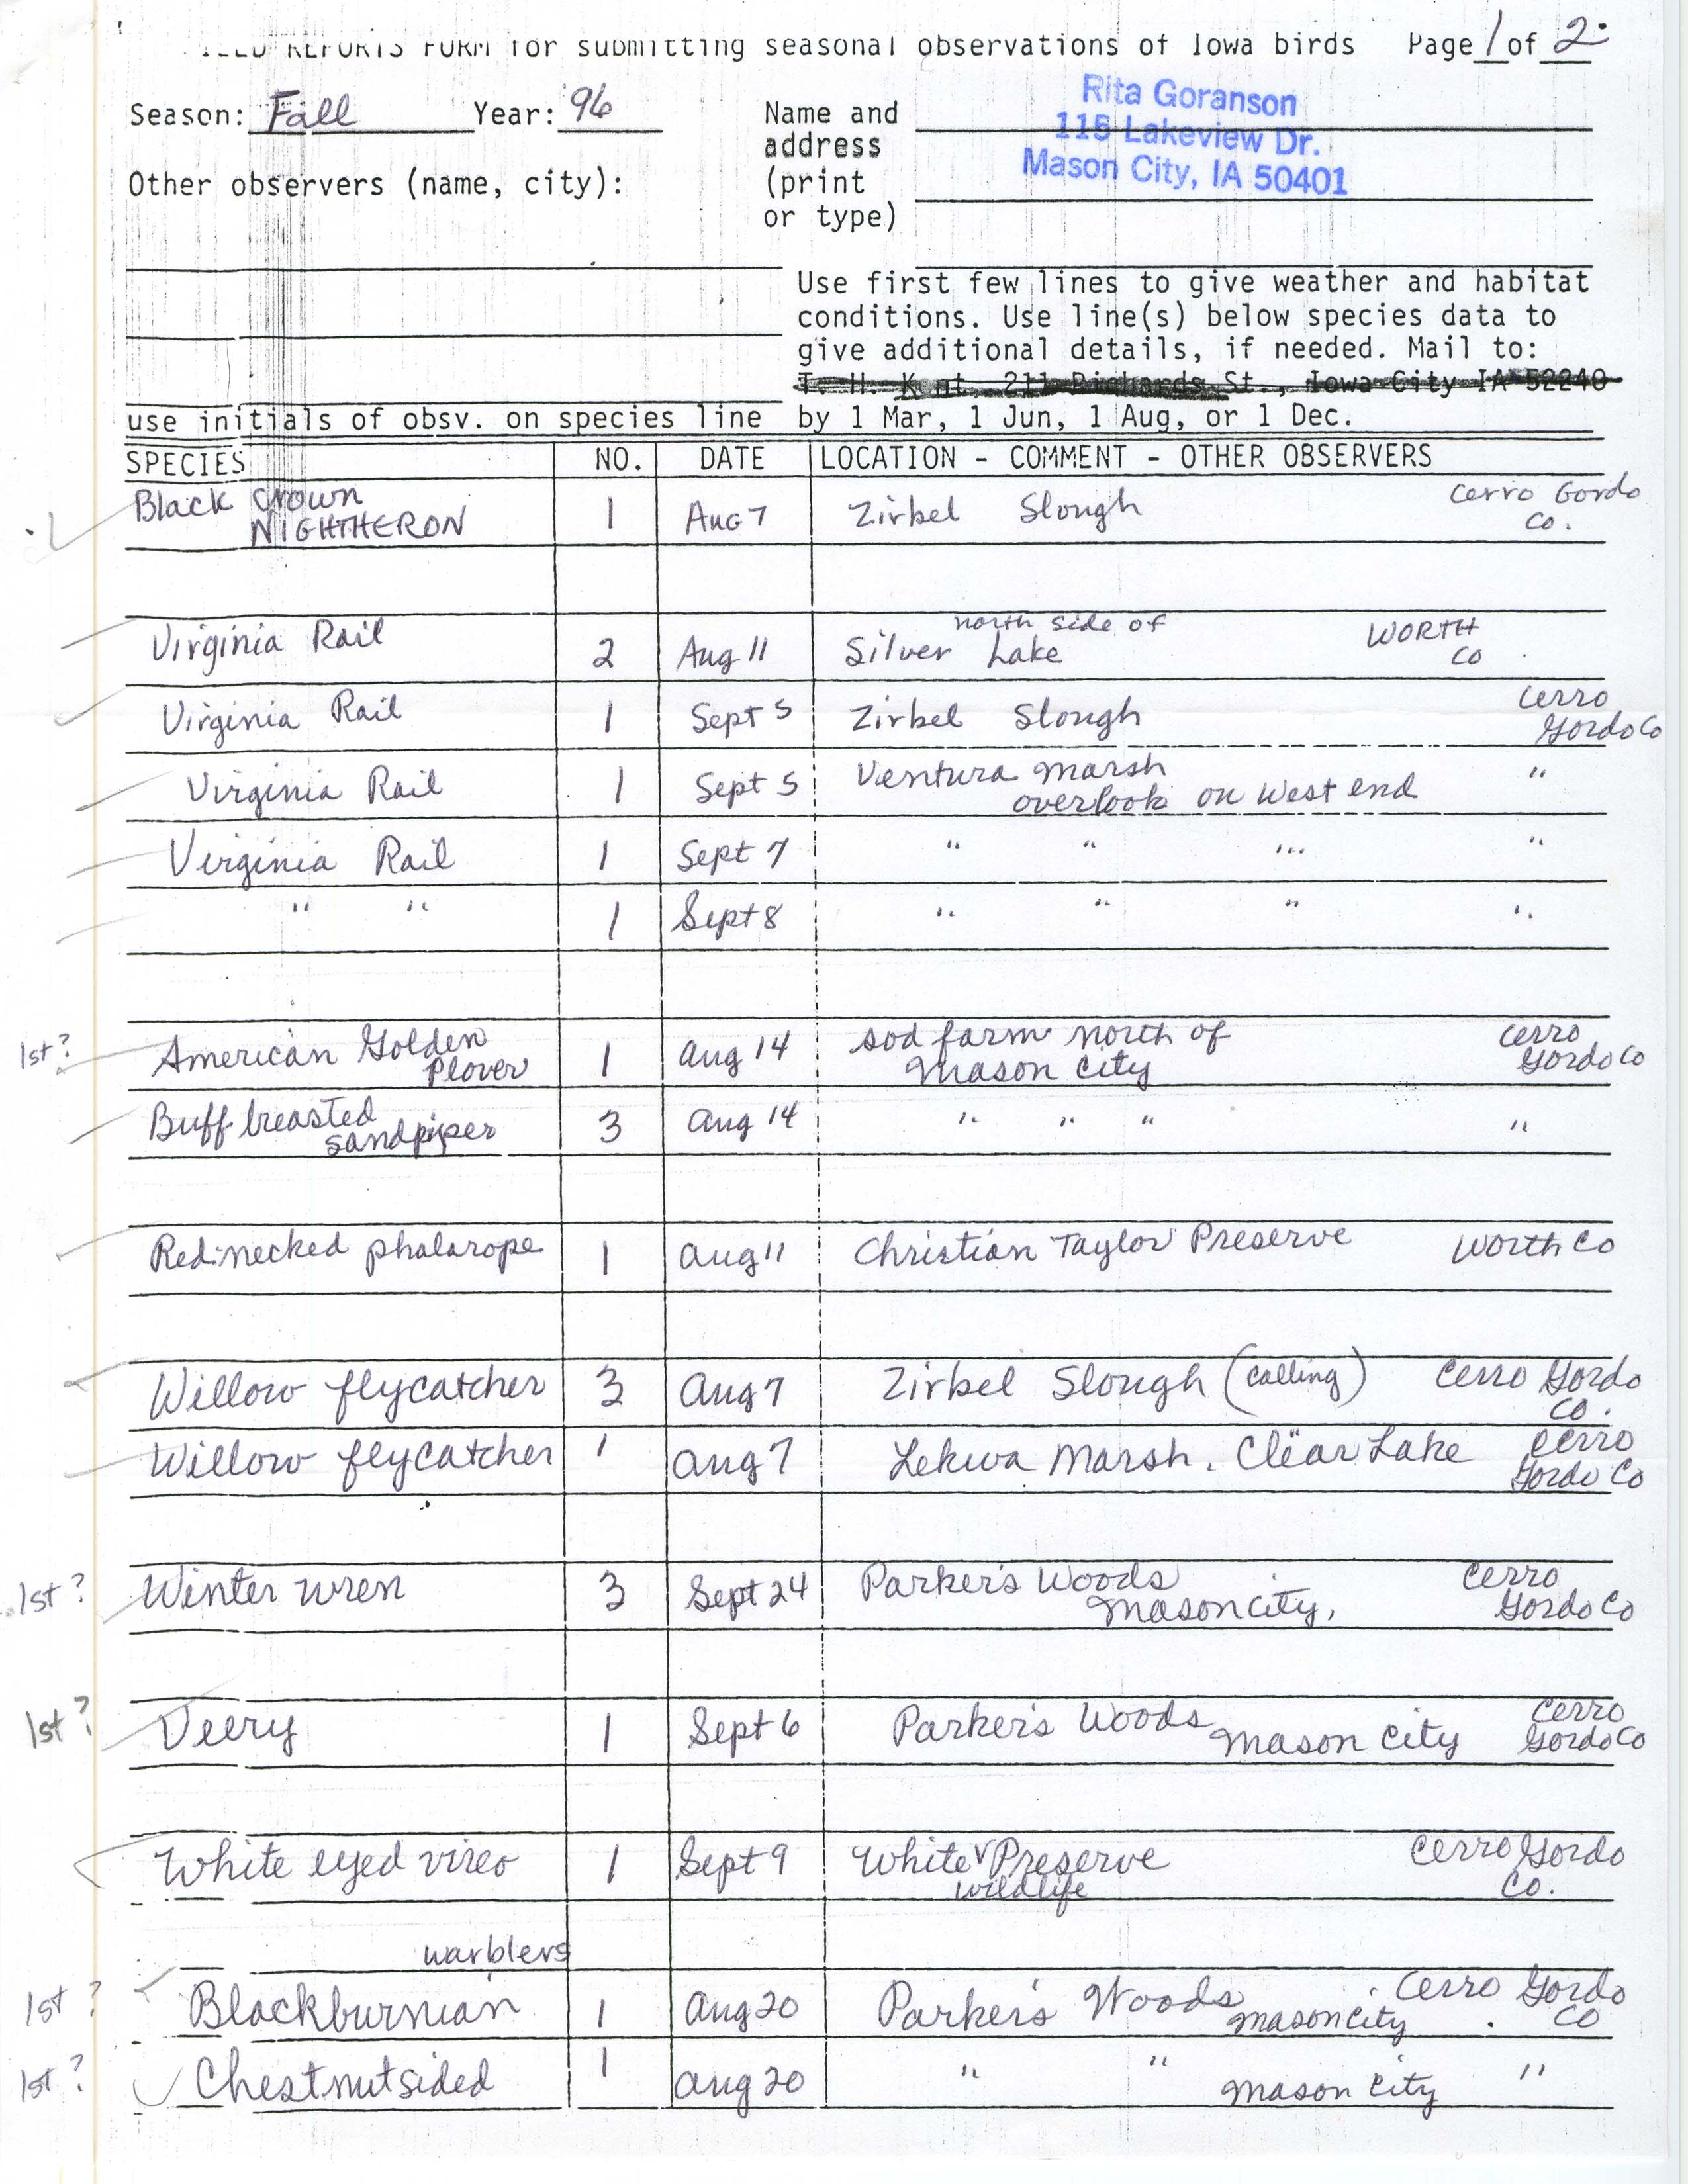 Field reports form for submitting seasonal observations of Iowa birds, Rita Goranson, fall 1996